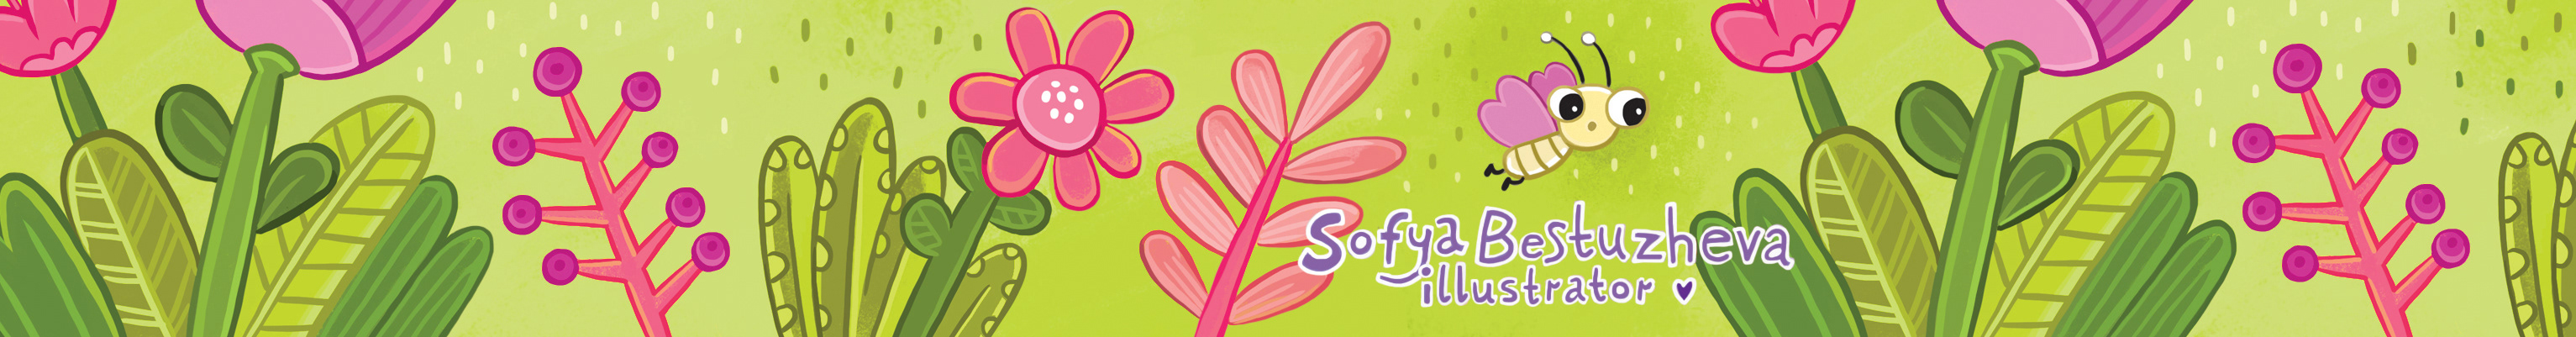 Sofya Bestuzheva's profile banner